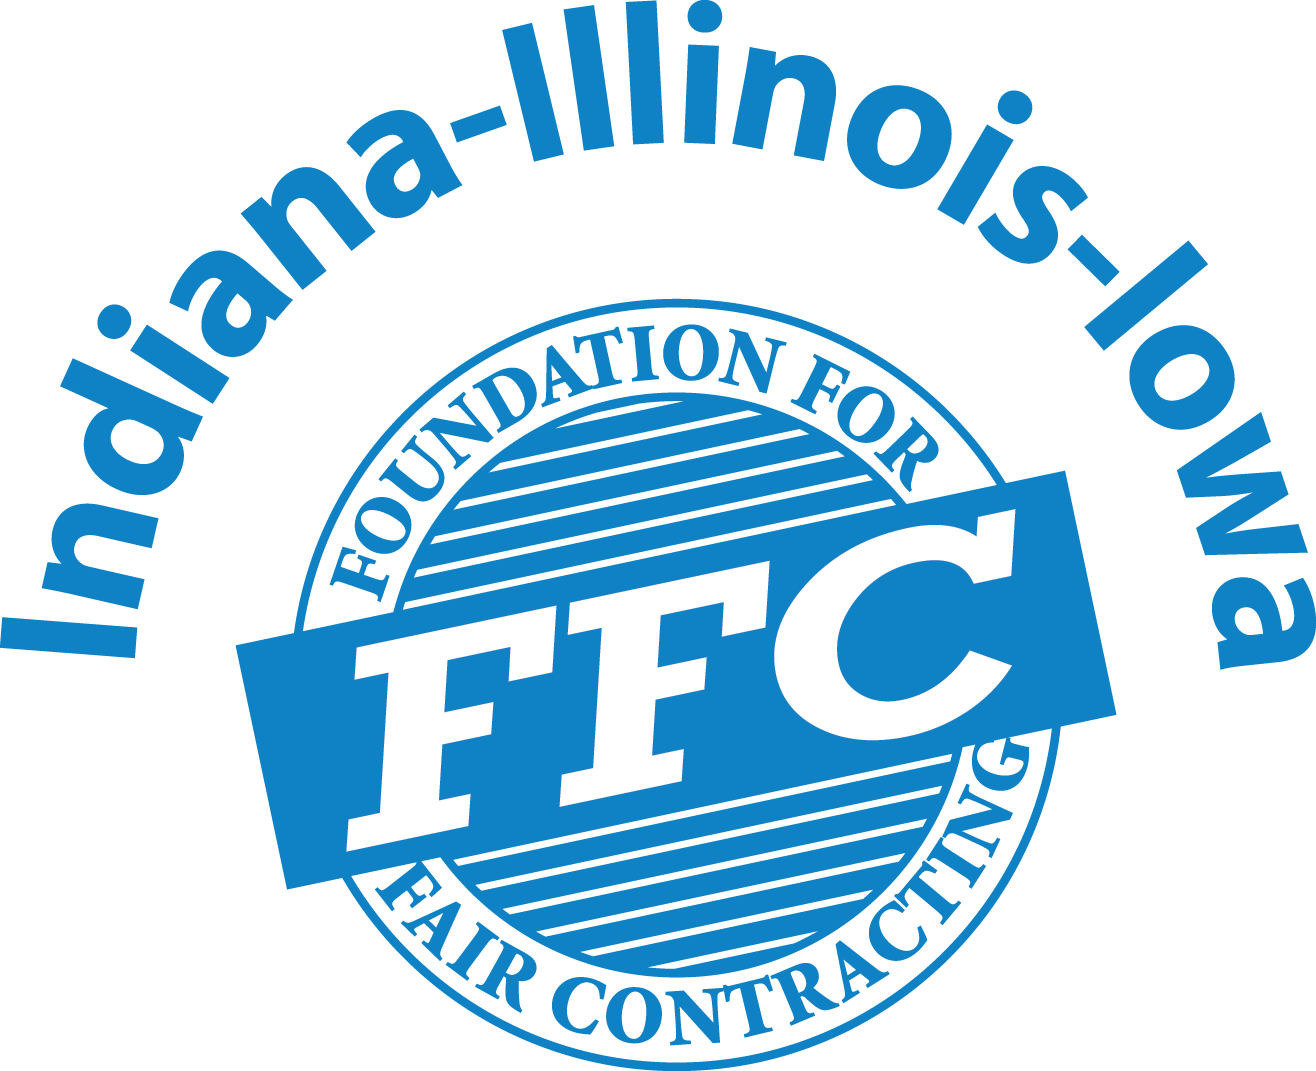 Indiana-Illinois-Iowa FFC